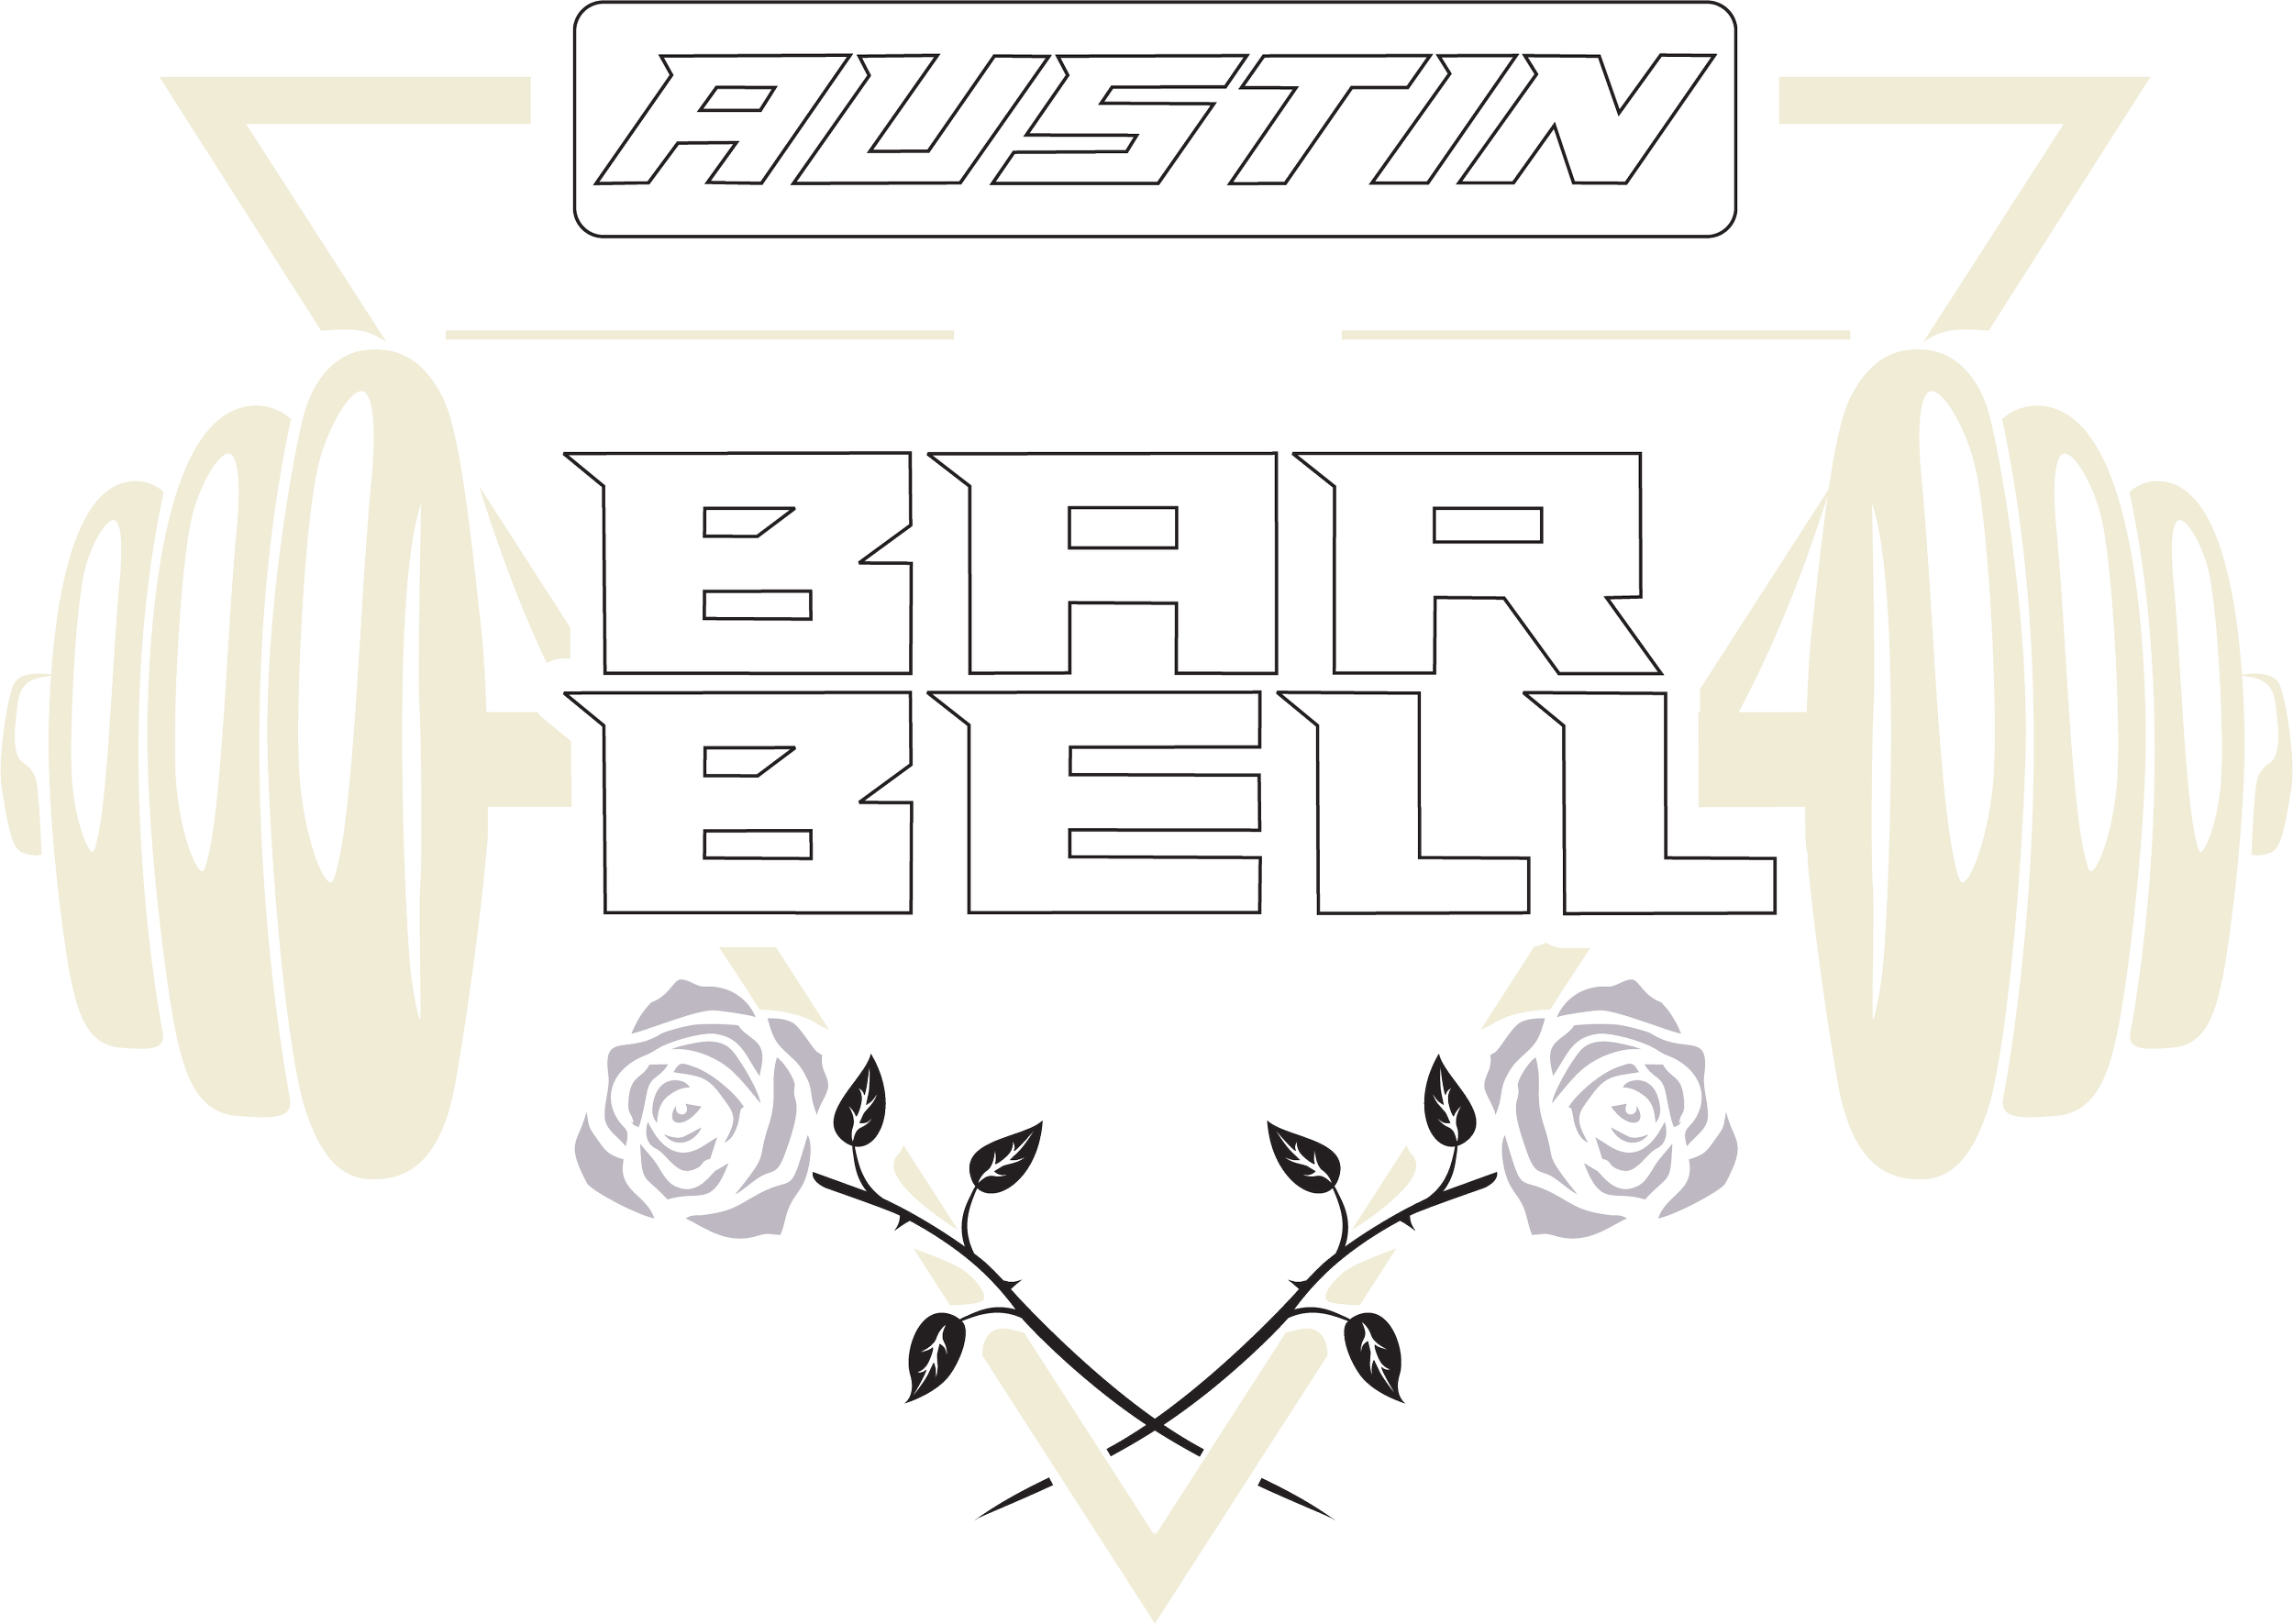 The Austin Barbell Club